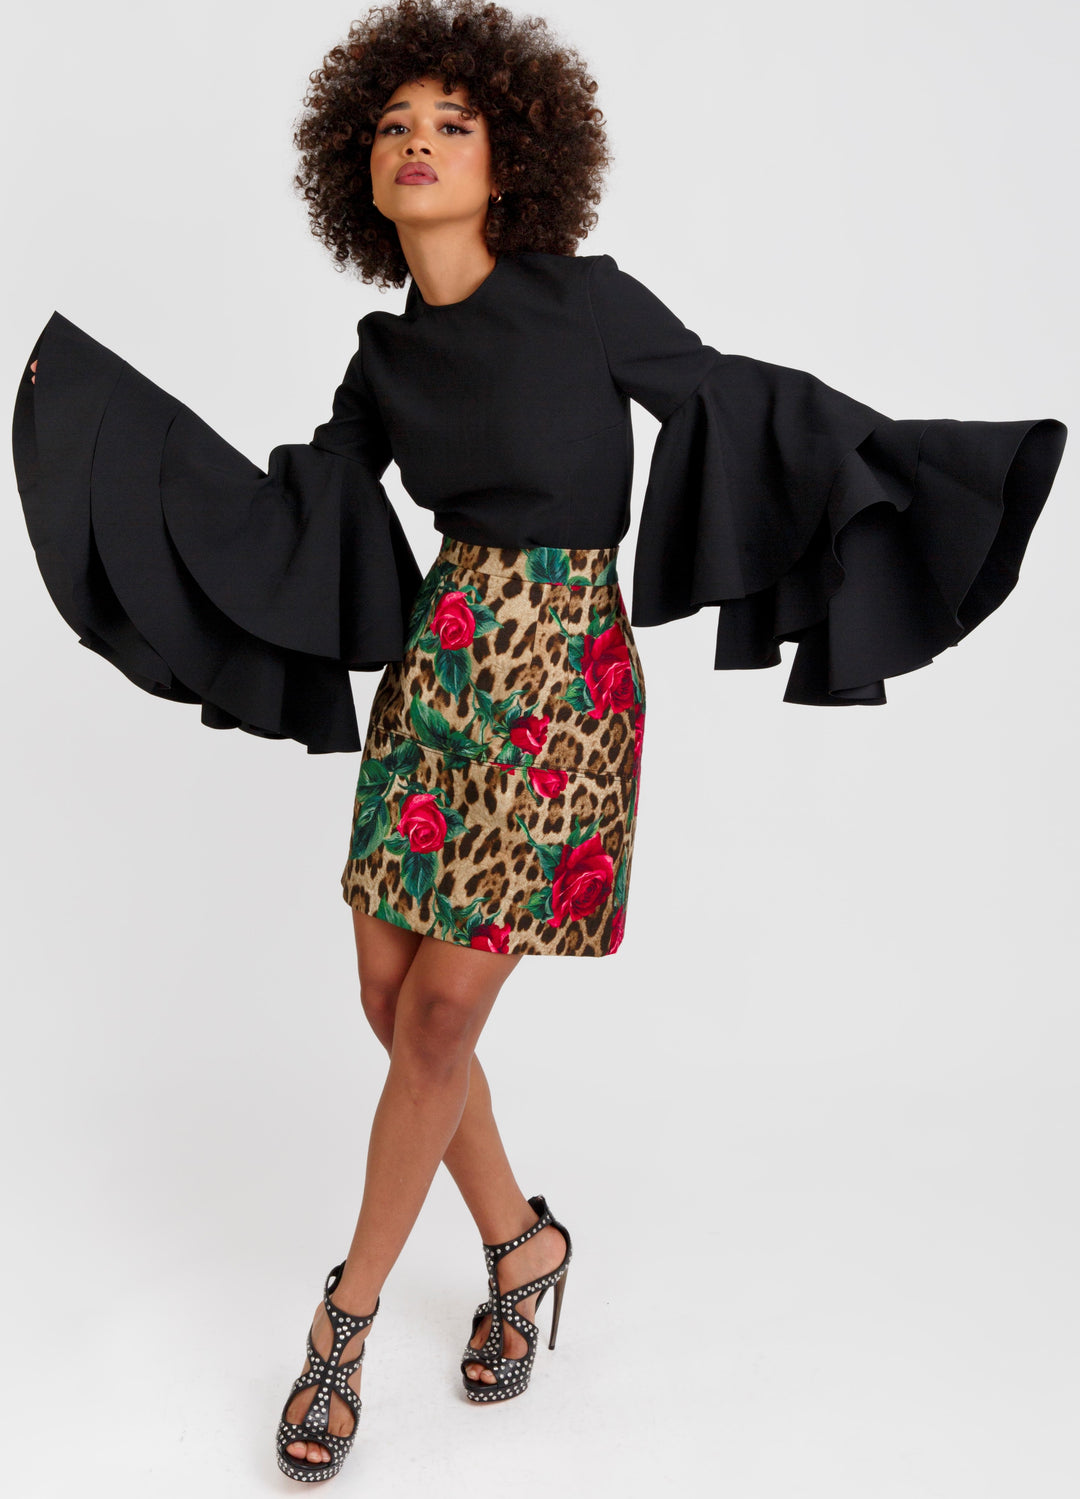 DOLCE & GABBANA LEOPARD Print Multicolour Rose  Skirt Veronique Luxury Collections